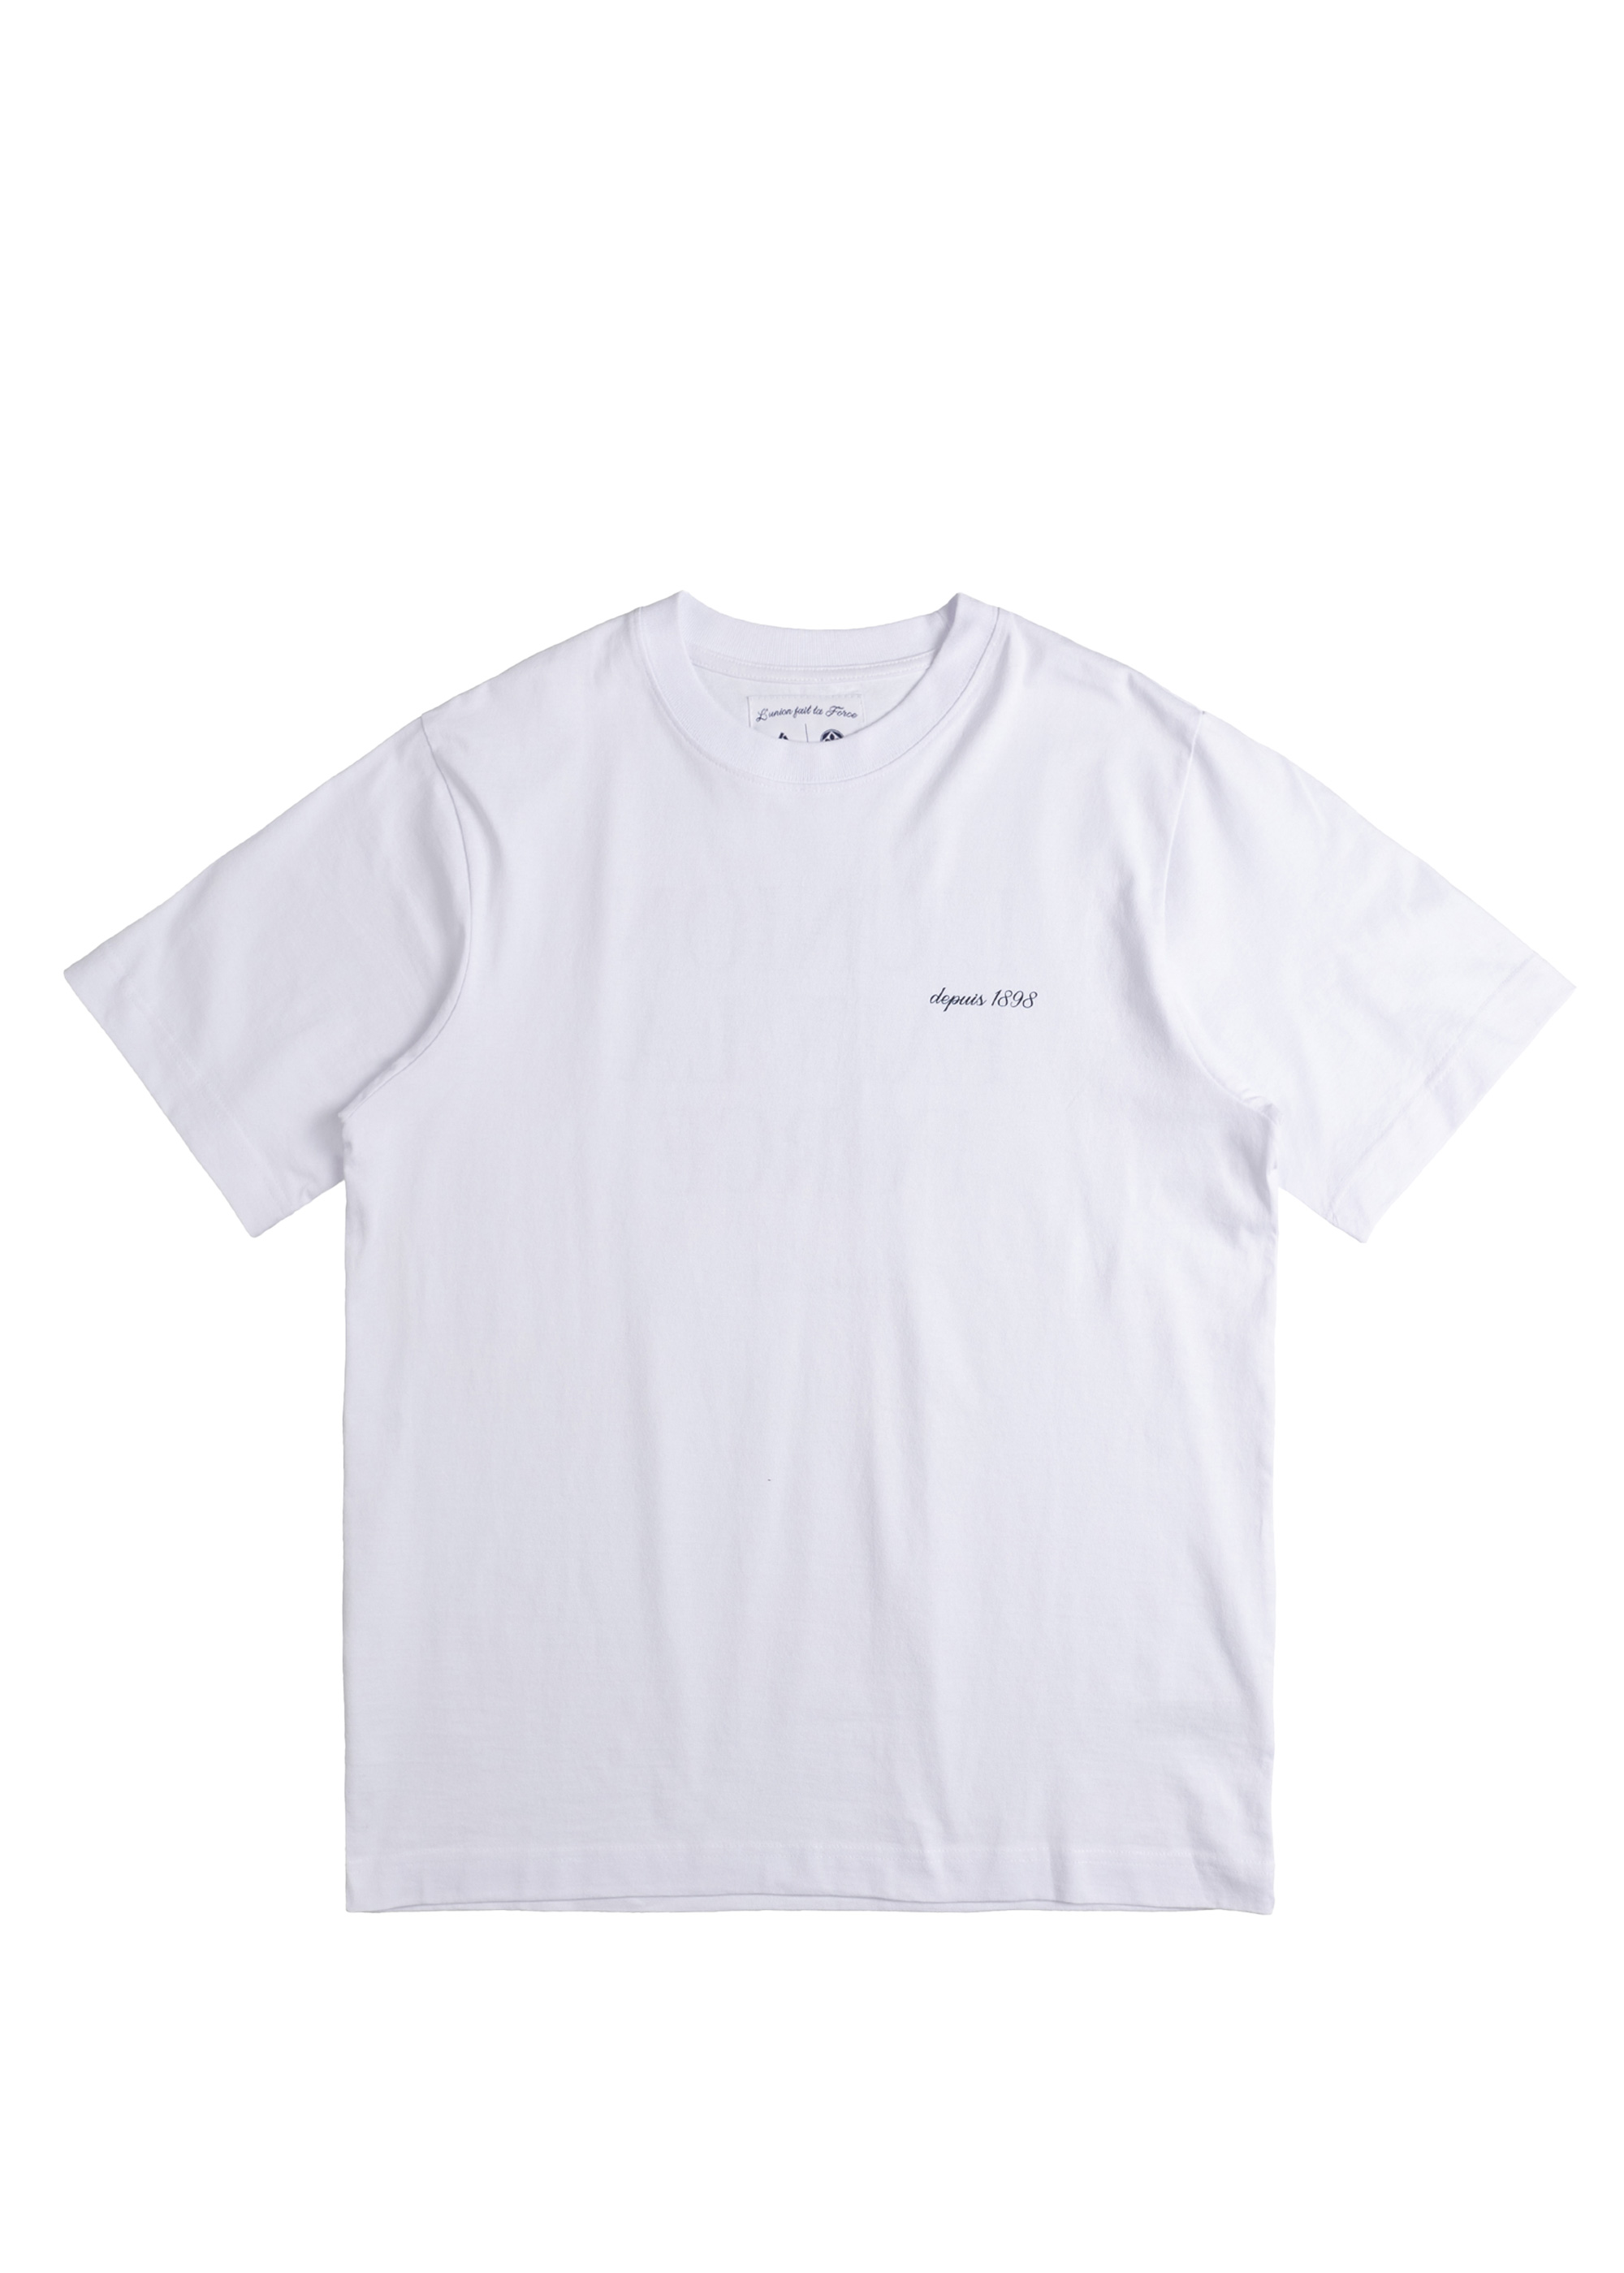 Asphaltgold x SV Darmstadt Le Lis T-Shirt (White)